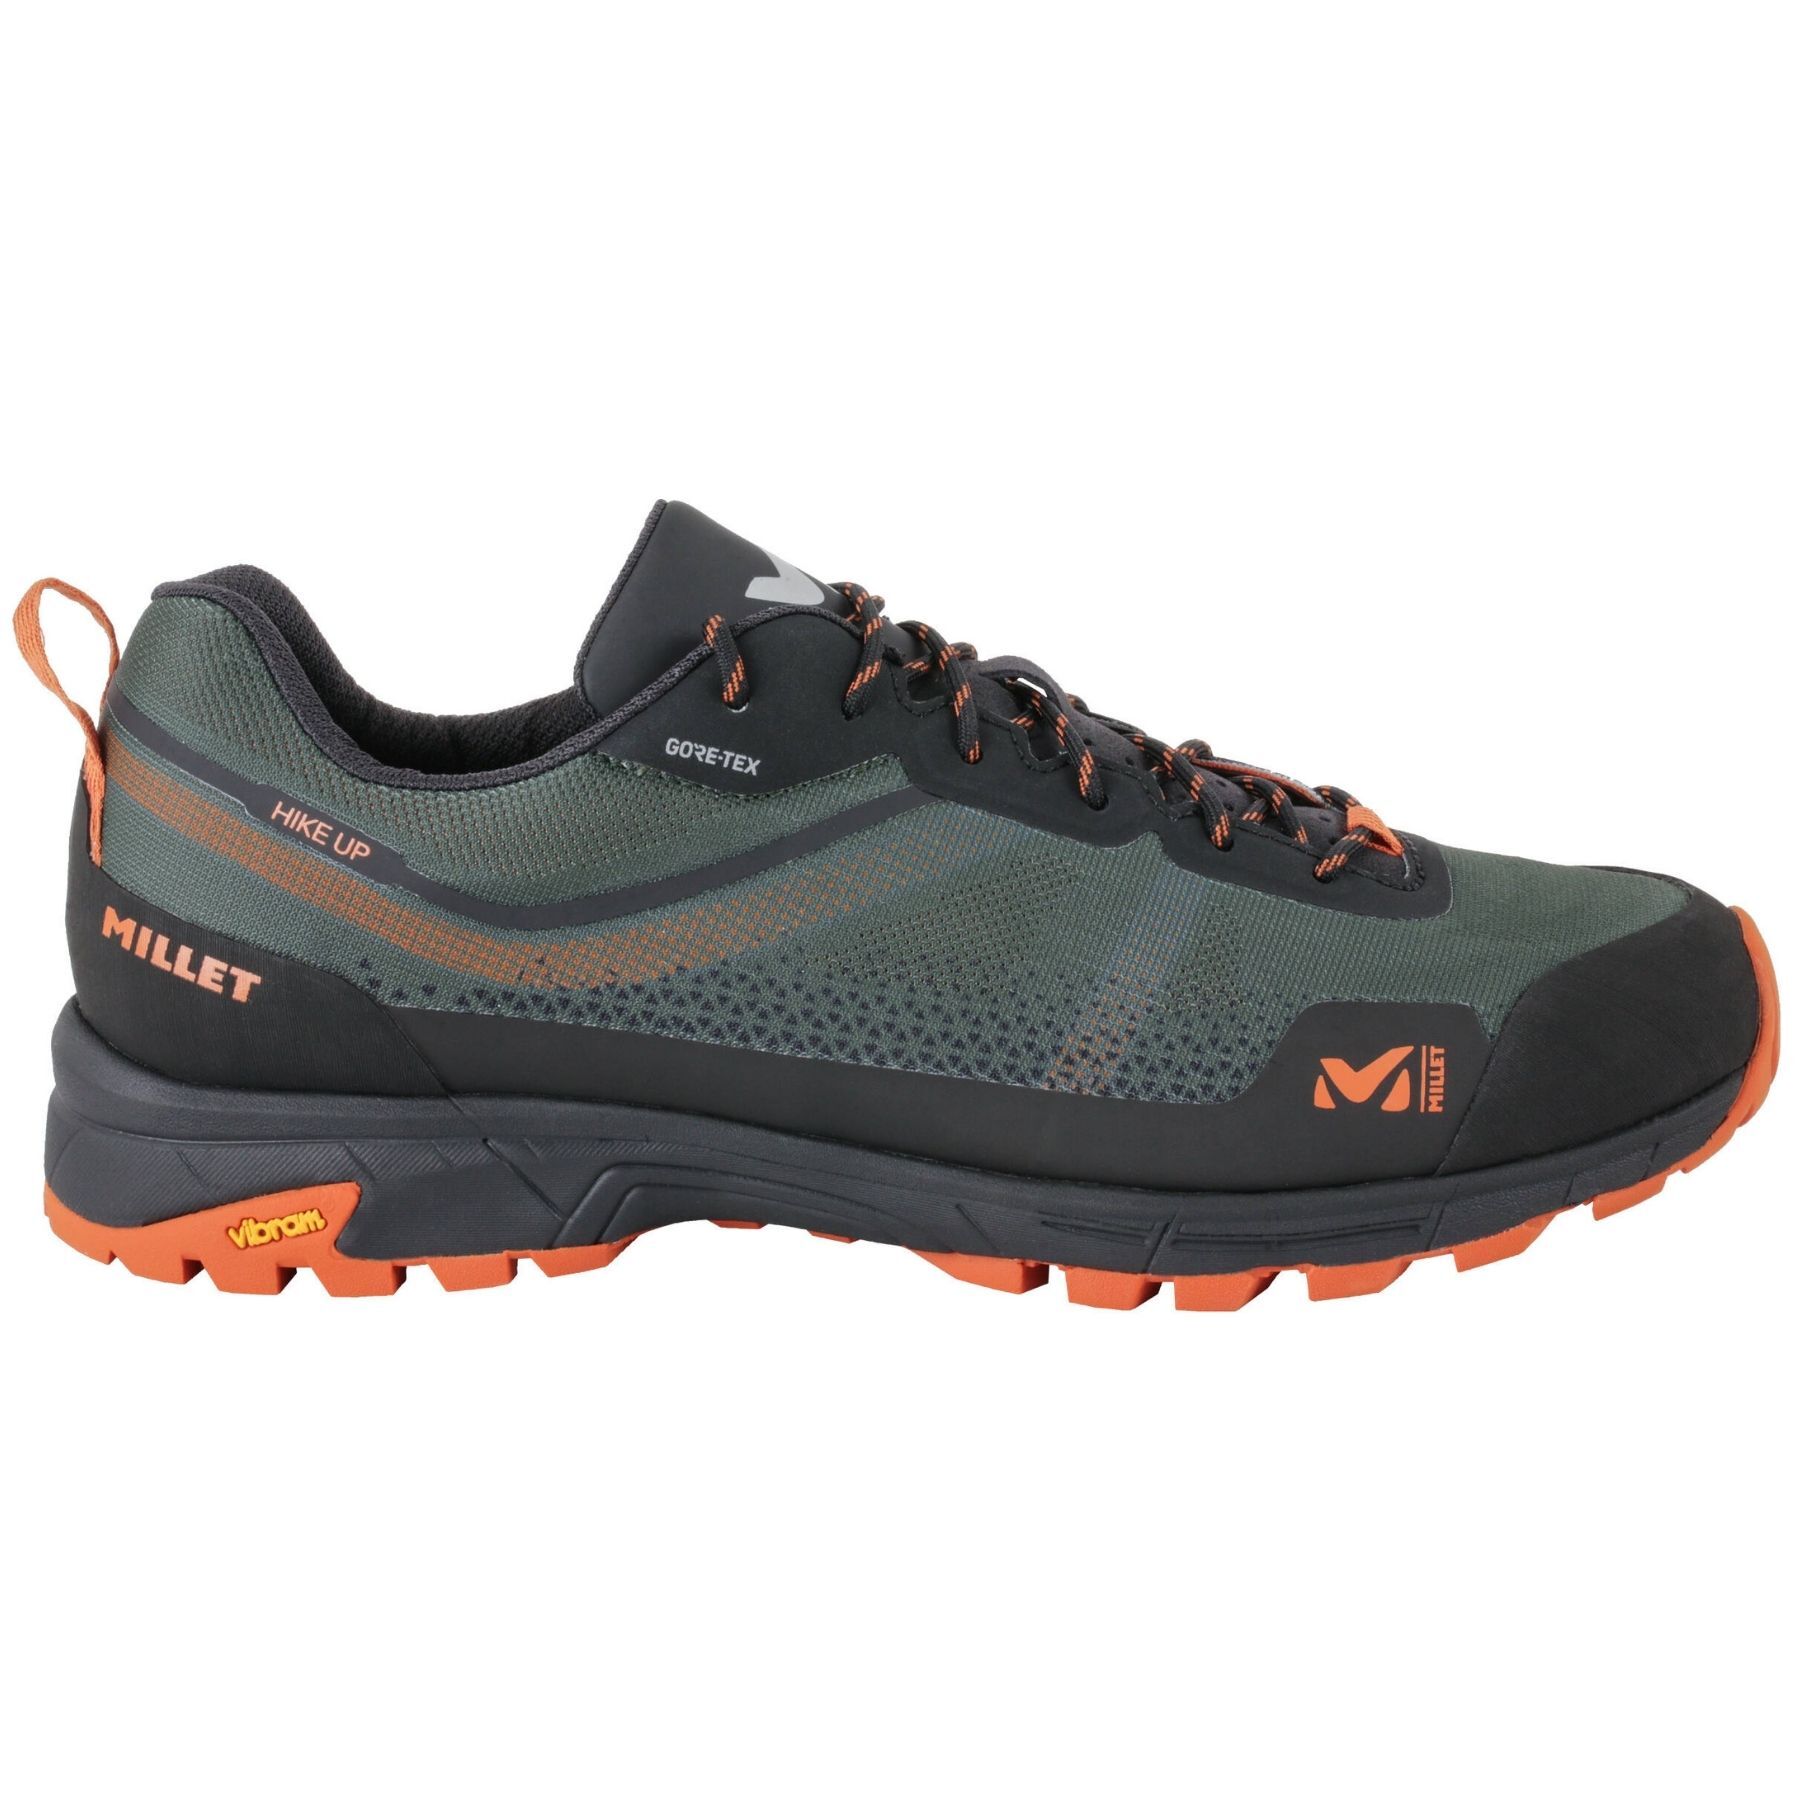 Millet Hike Up GTX new - Walking shoes - Men's